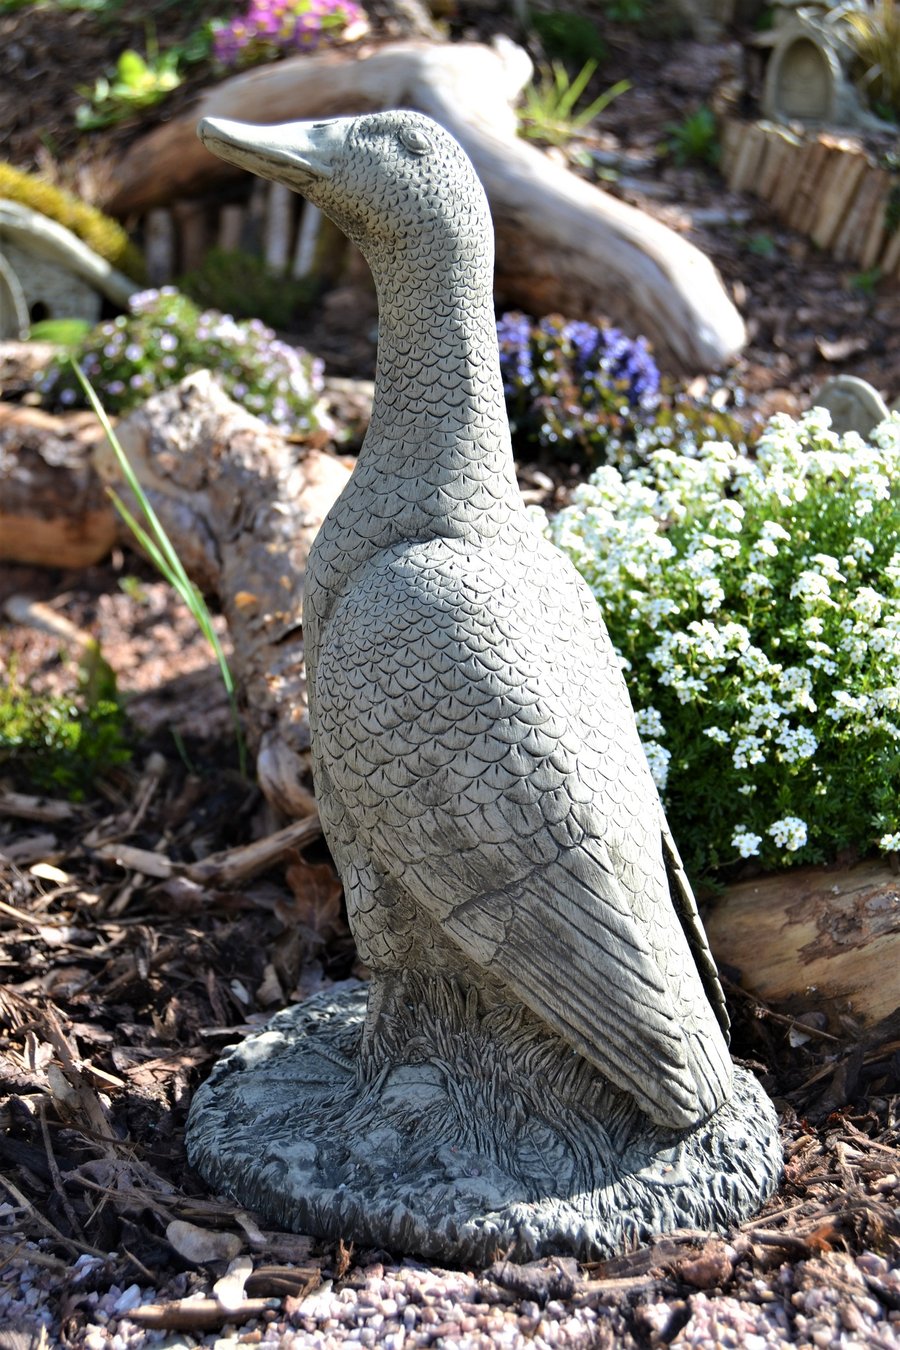 Thelma the Runner Duck Stone Garden Ornament